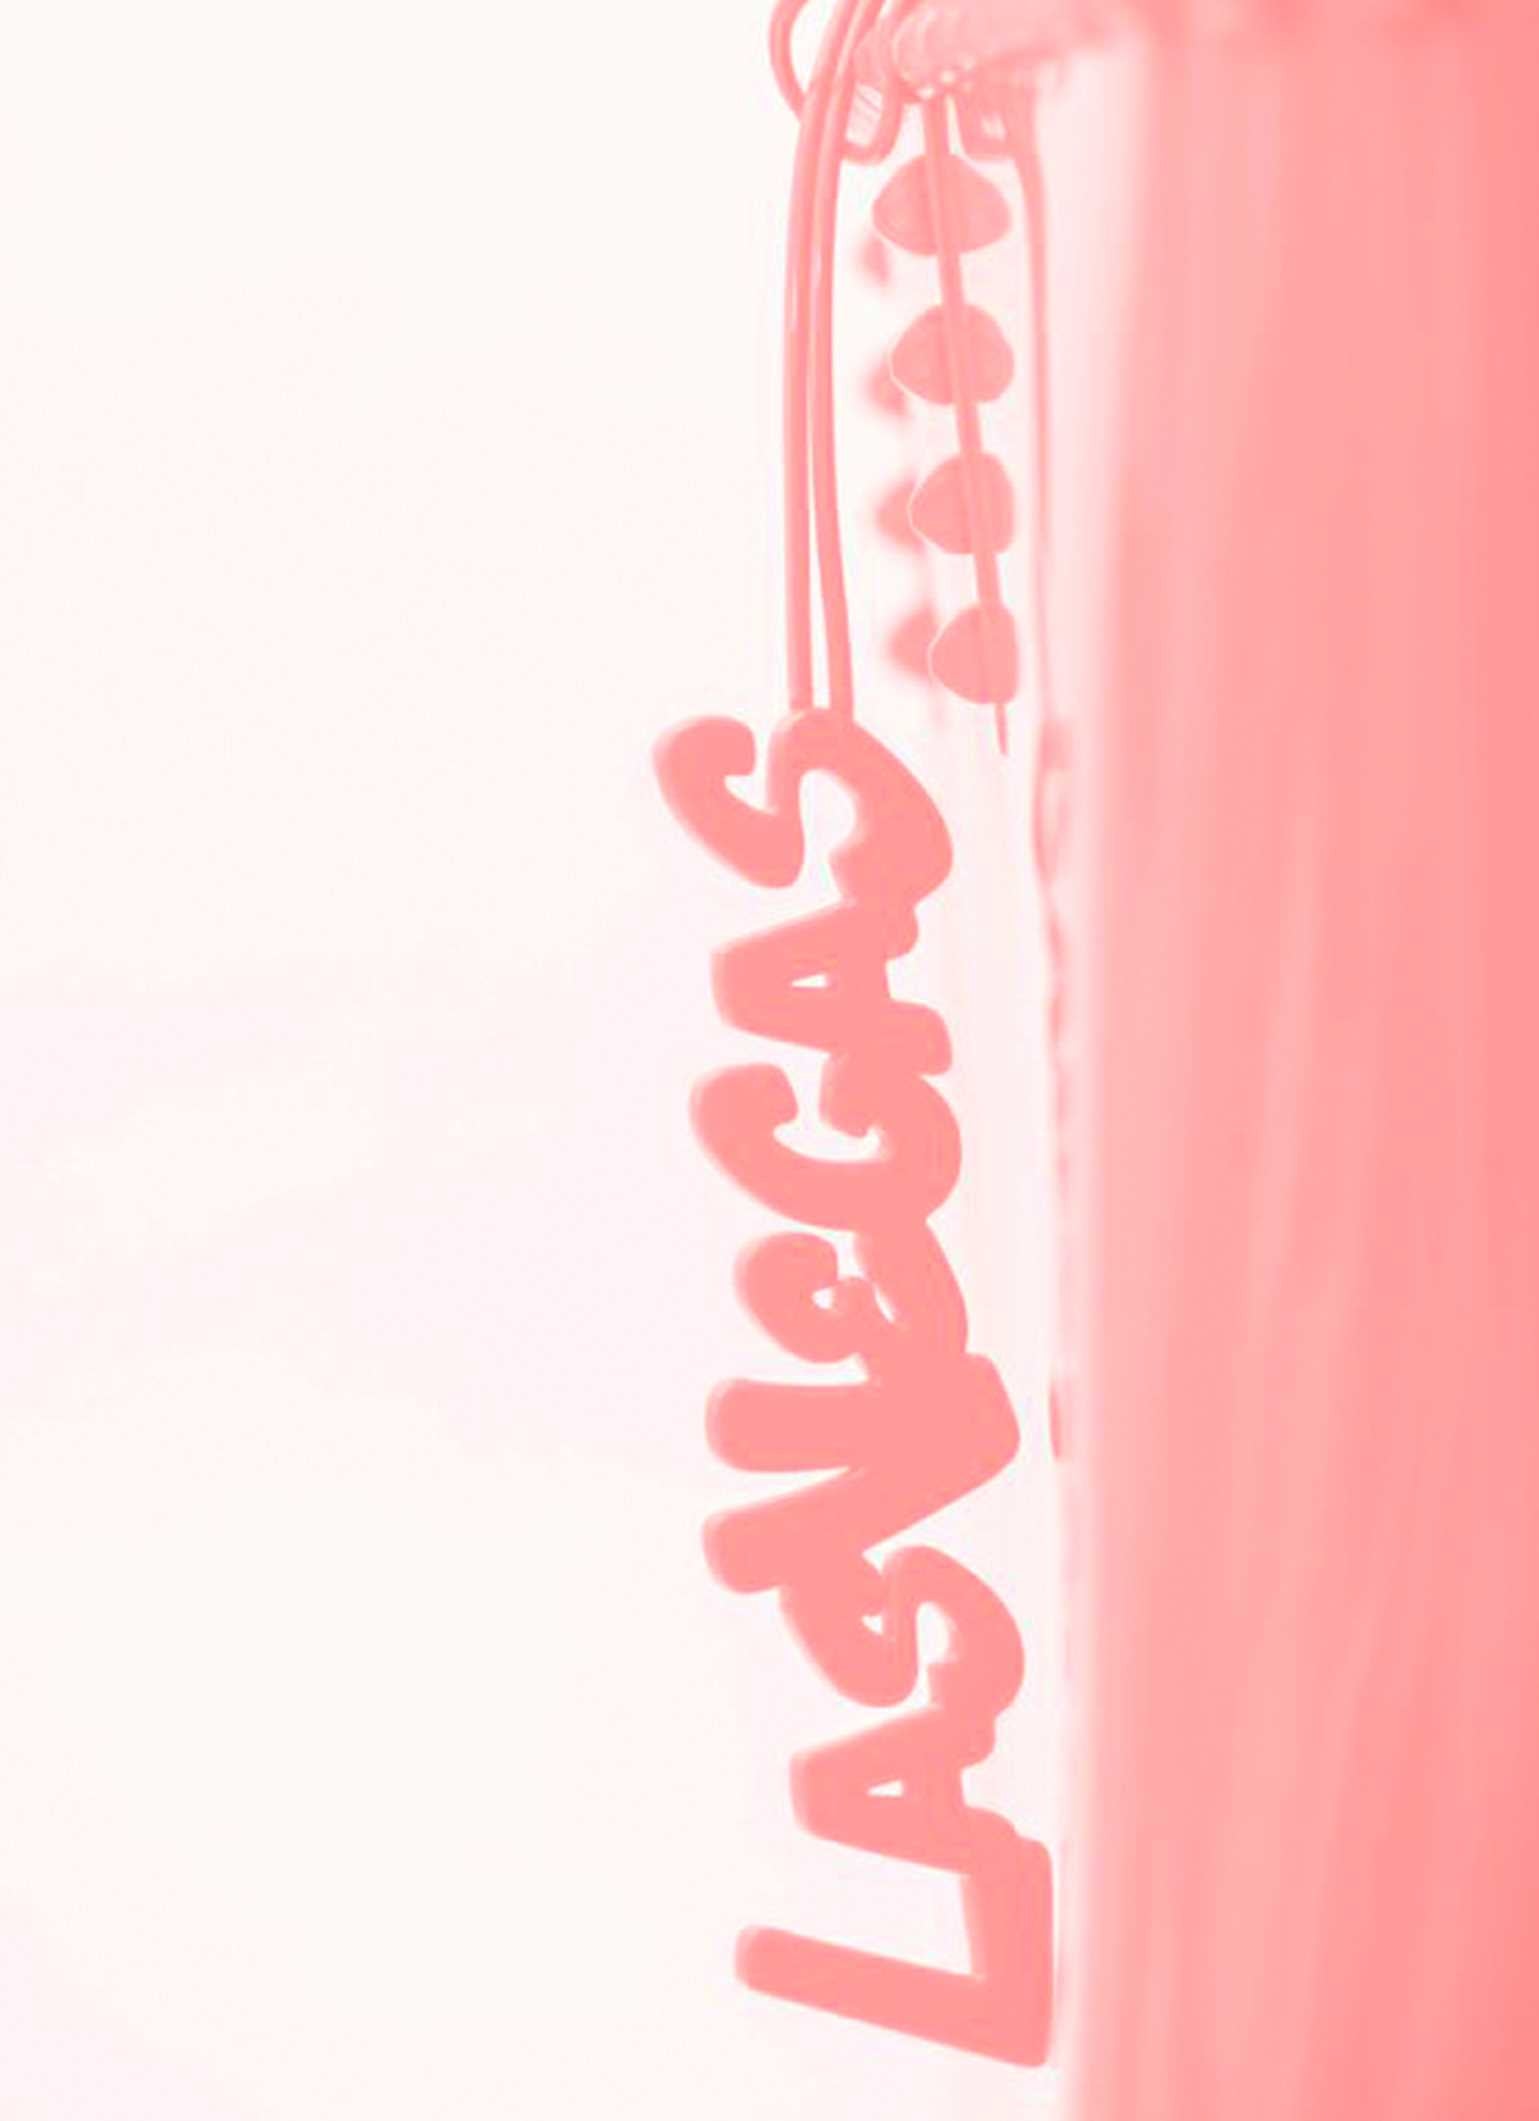 Vegan Carmen Sol Las Vegas jelly purse charms in color baby pink